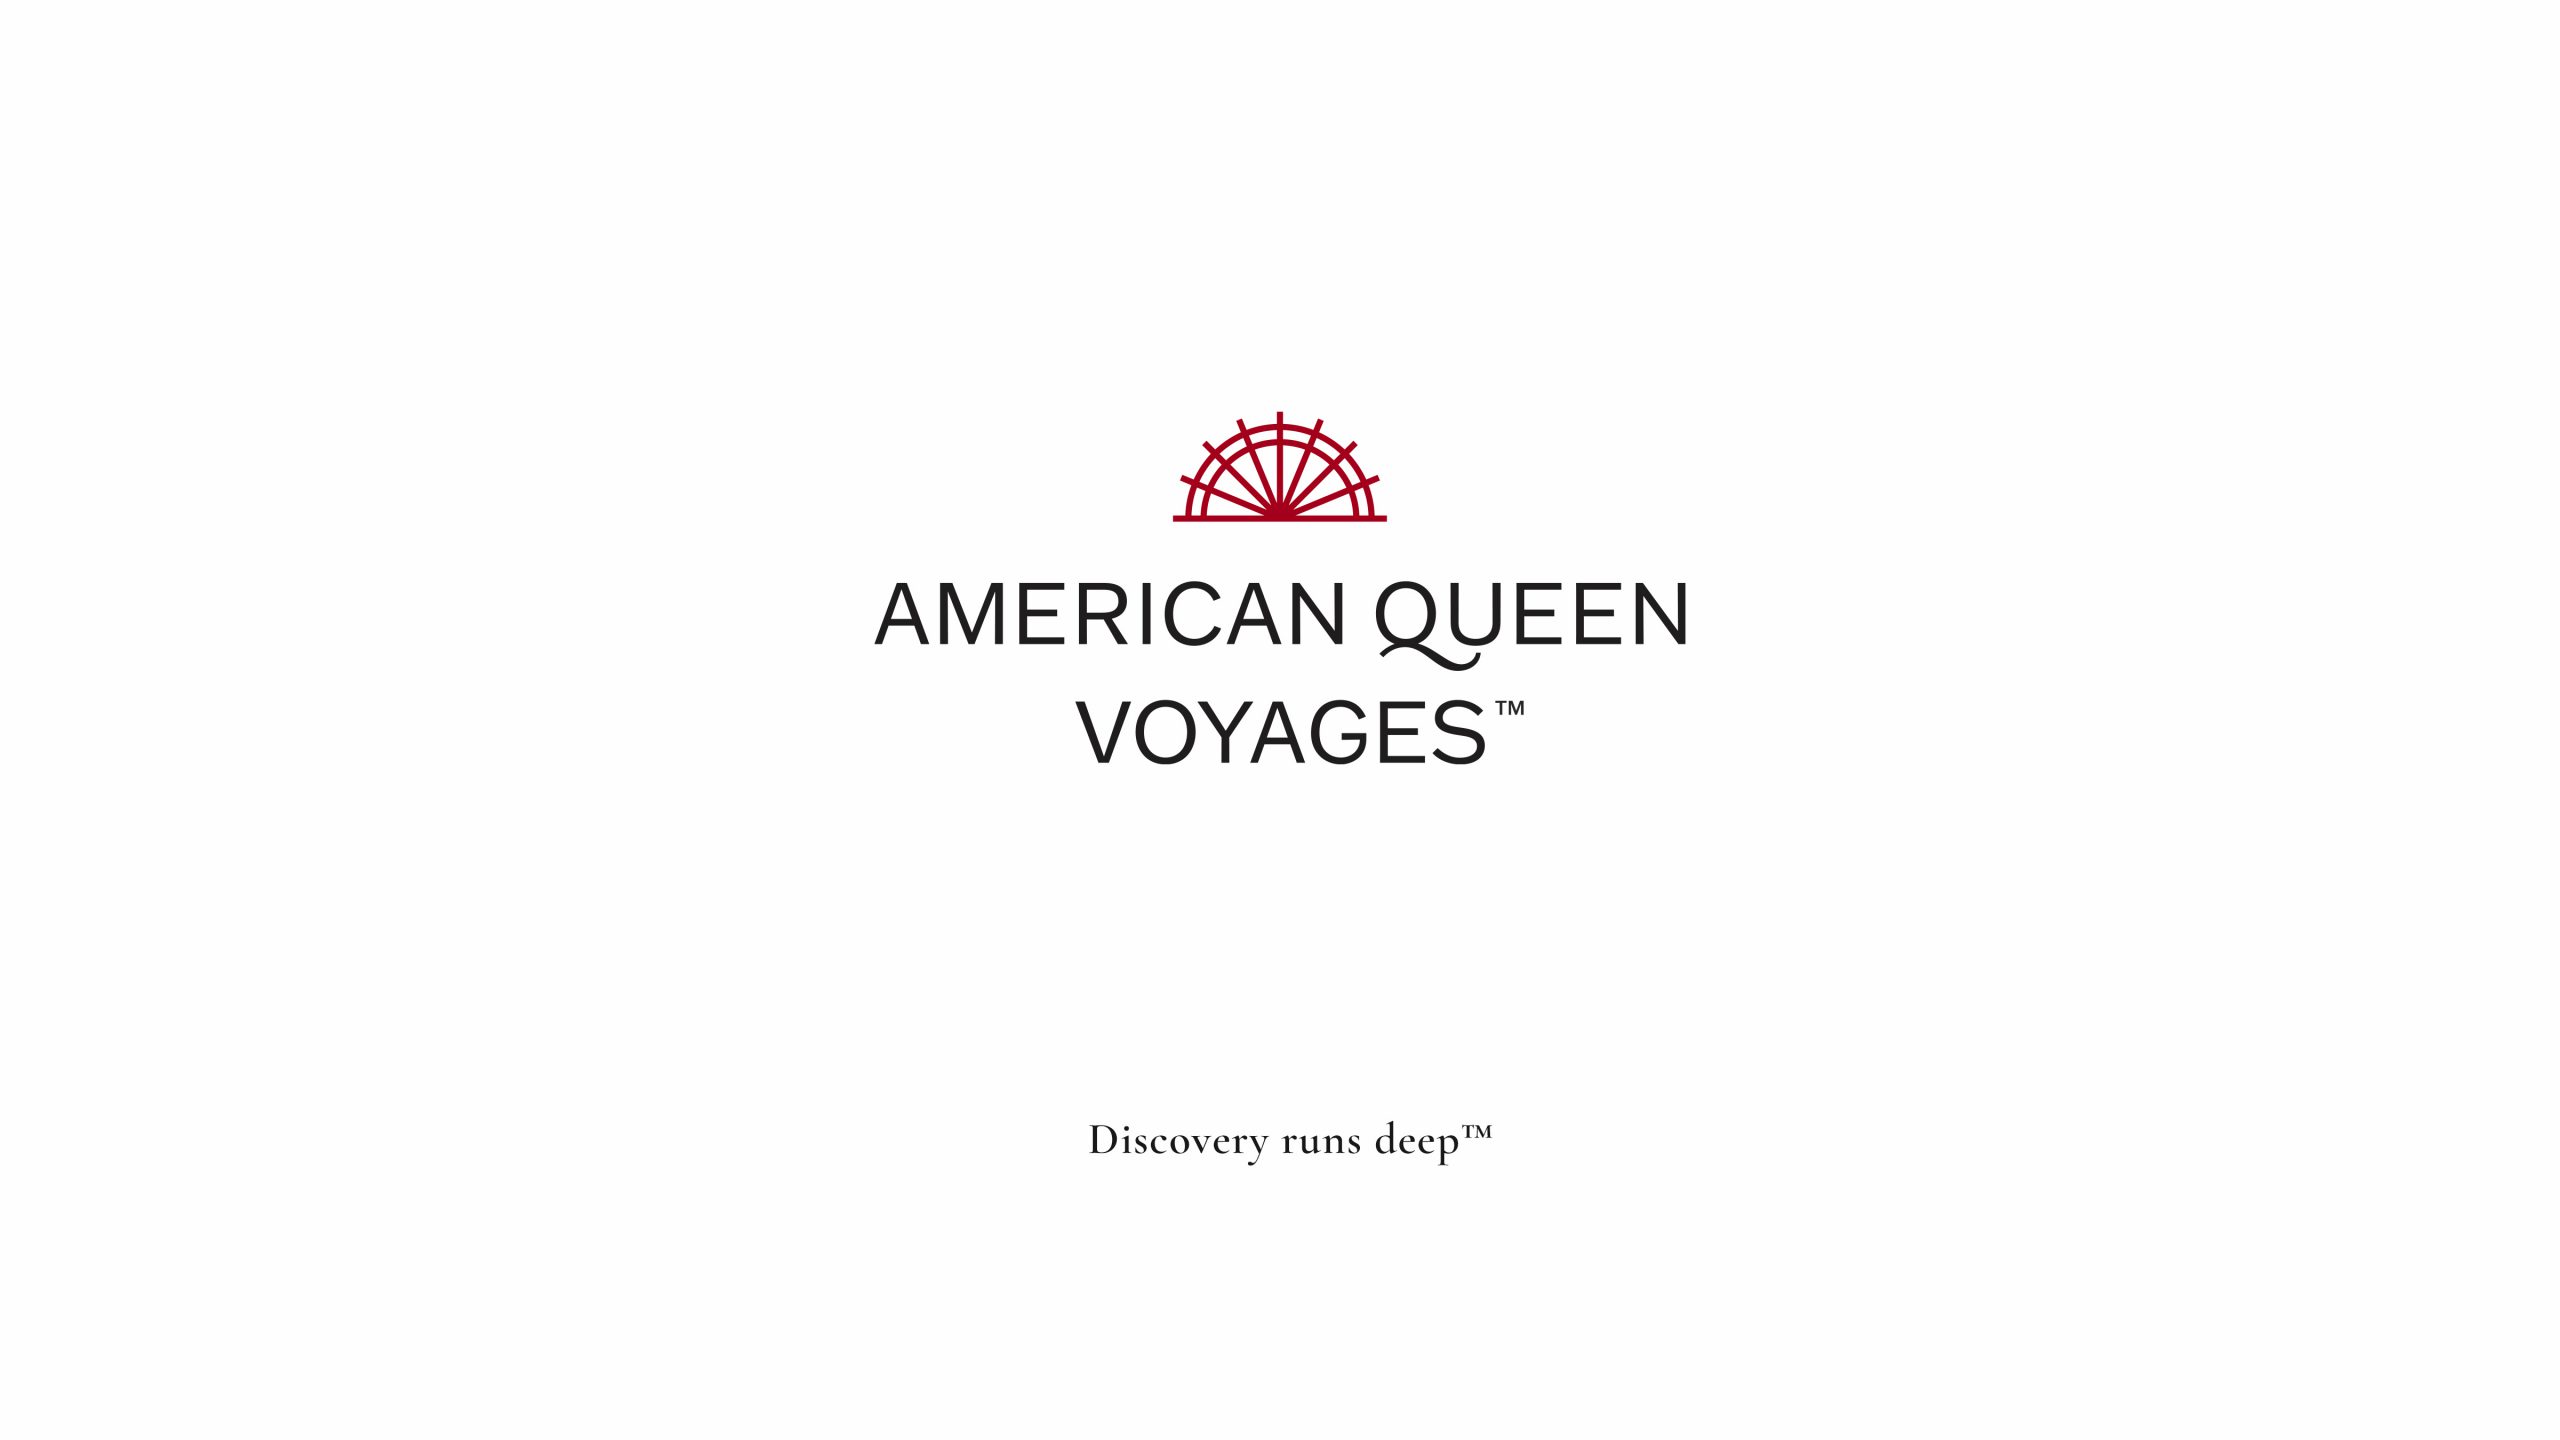 Pittsburgh, Pennsylvania - American Queen Voyages